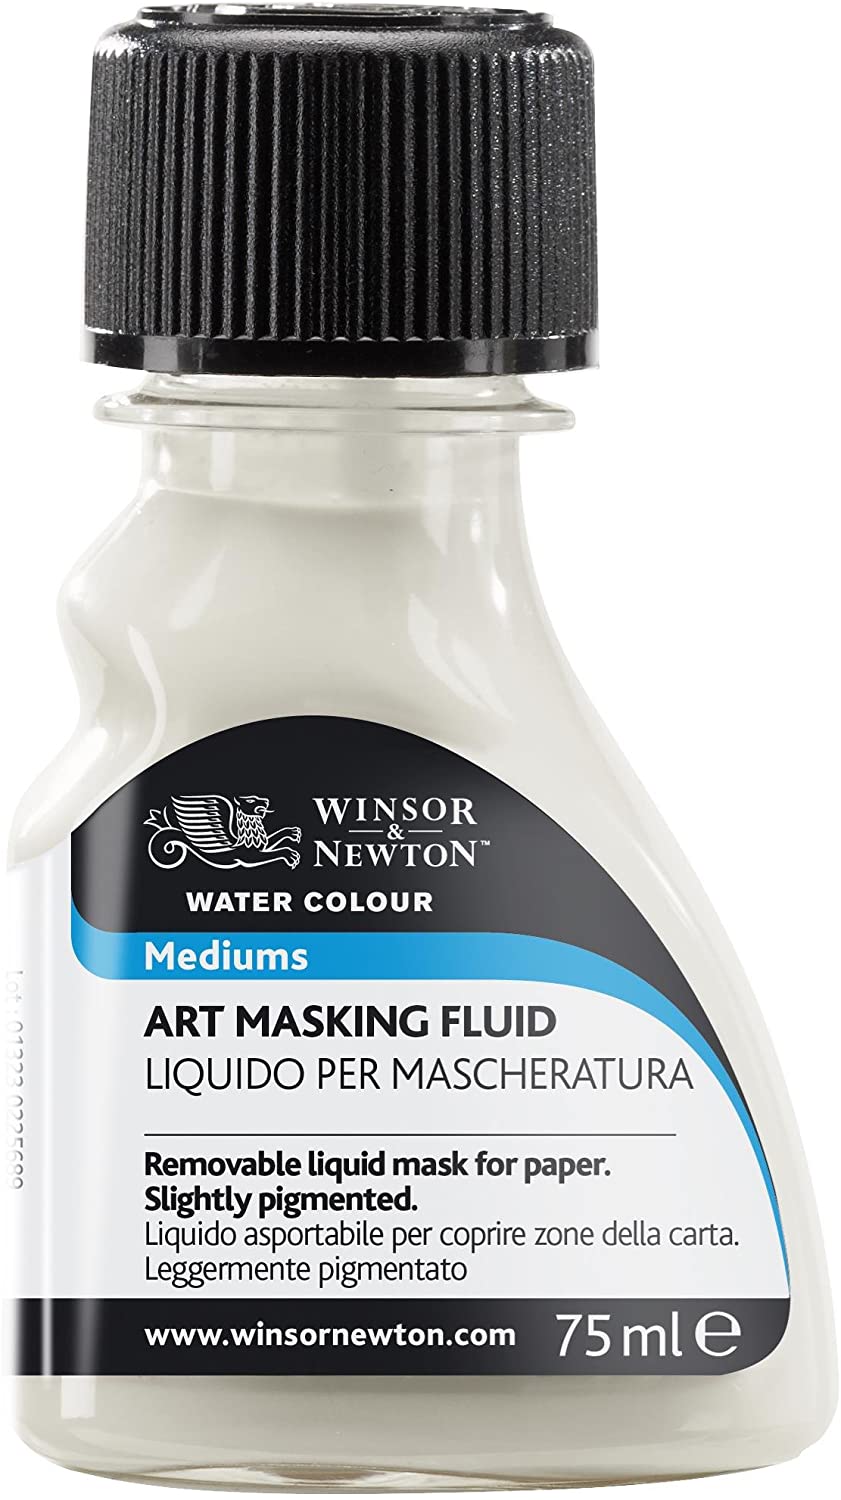 W&N 75 ml Maskin Fluid Colorless medium Watercolor